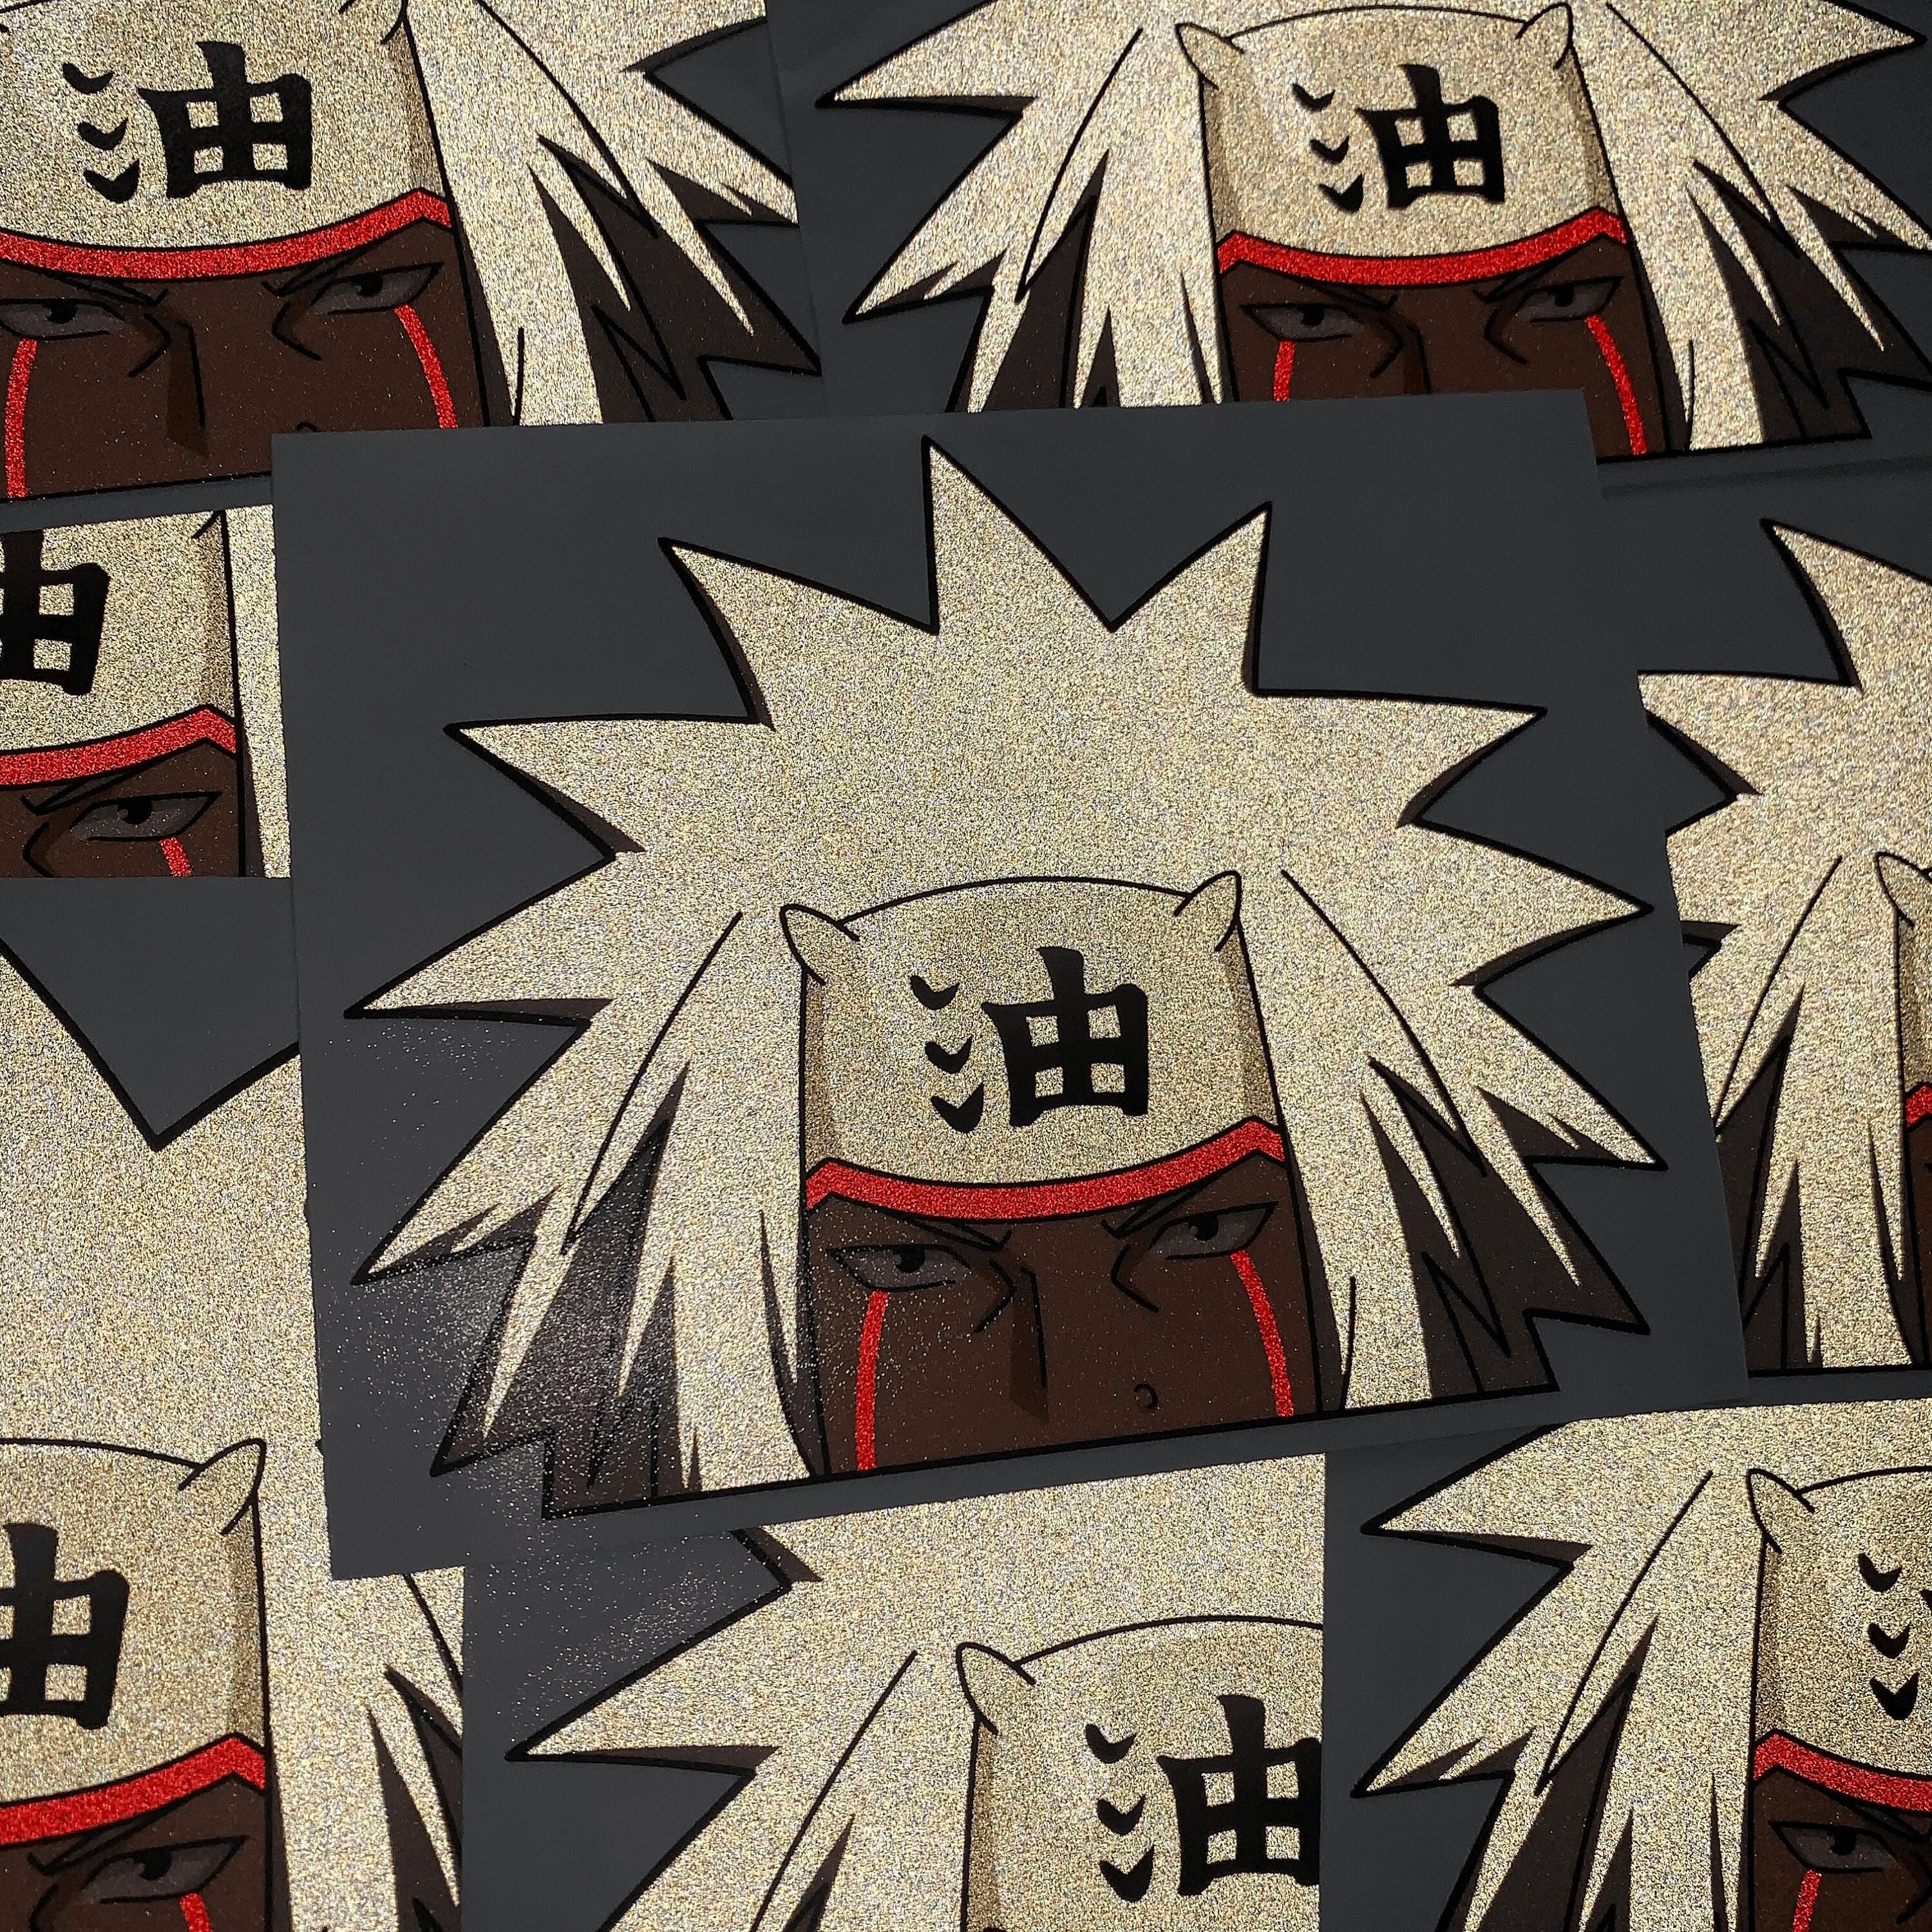 Naruto Shippuden Akatsuki Red Cloud Symbol Sticker by Jamaaf Tasne - Pixels